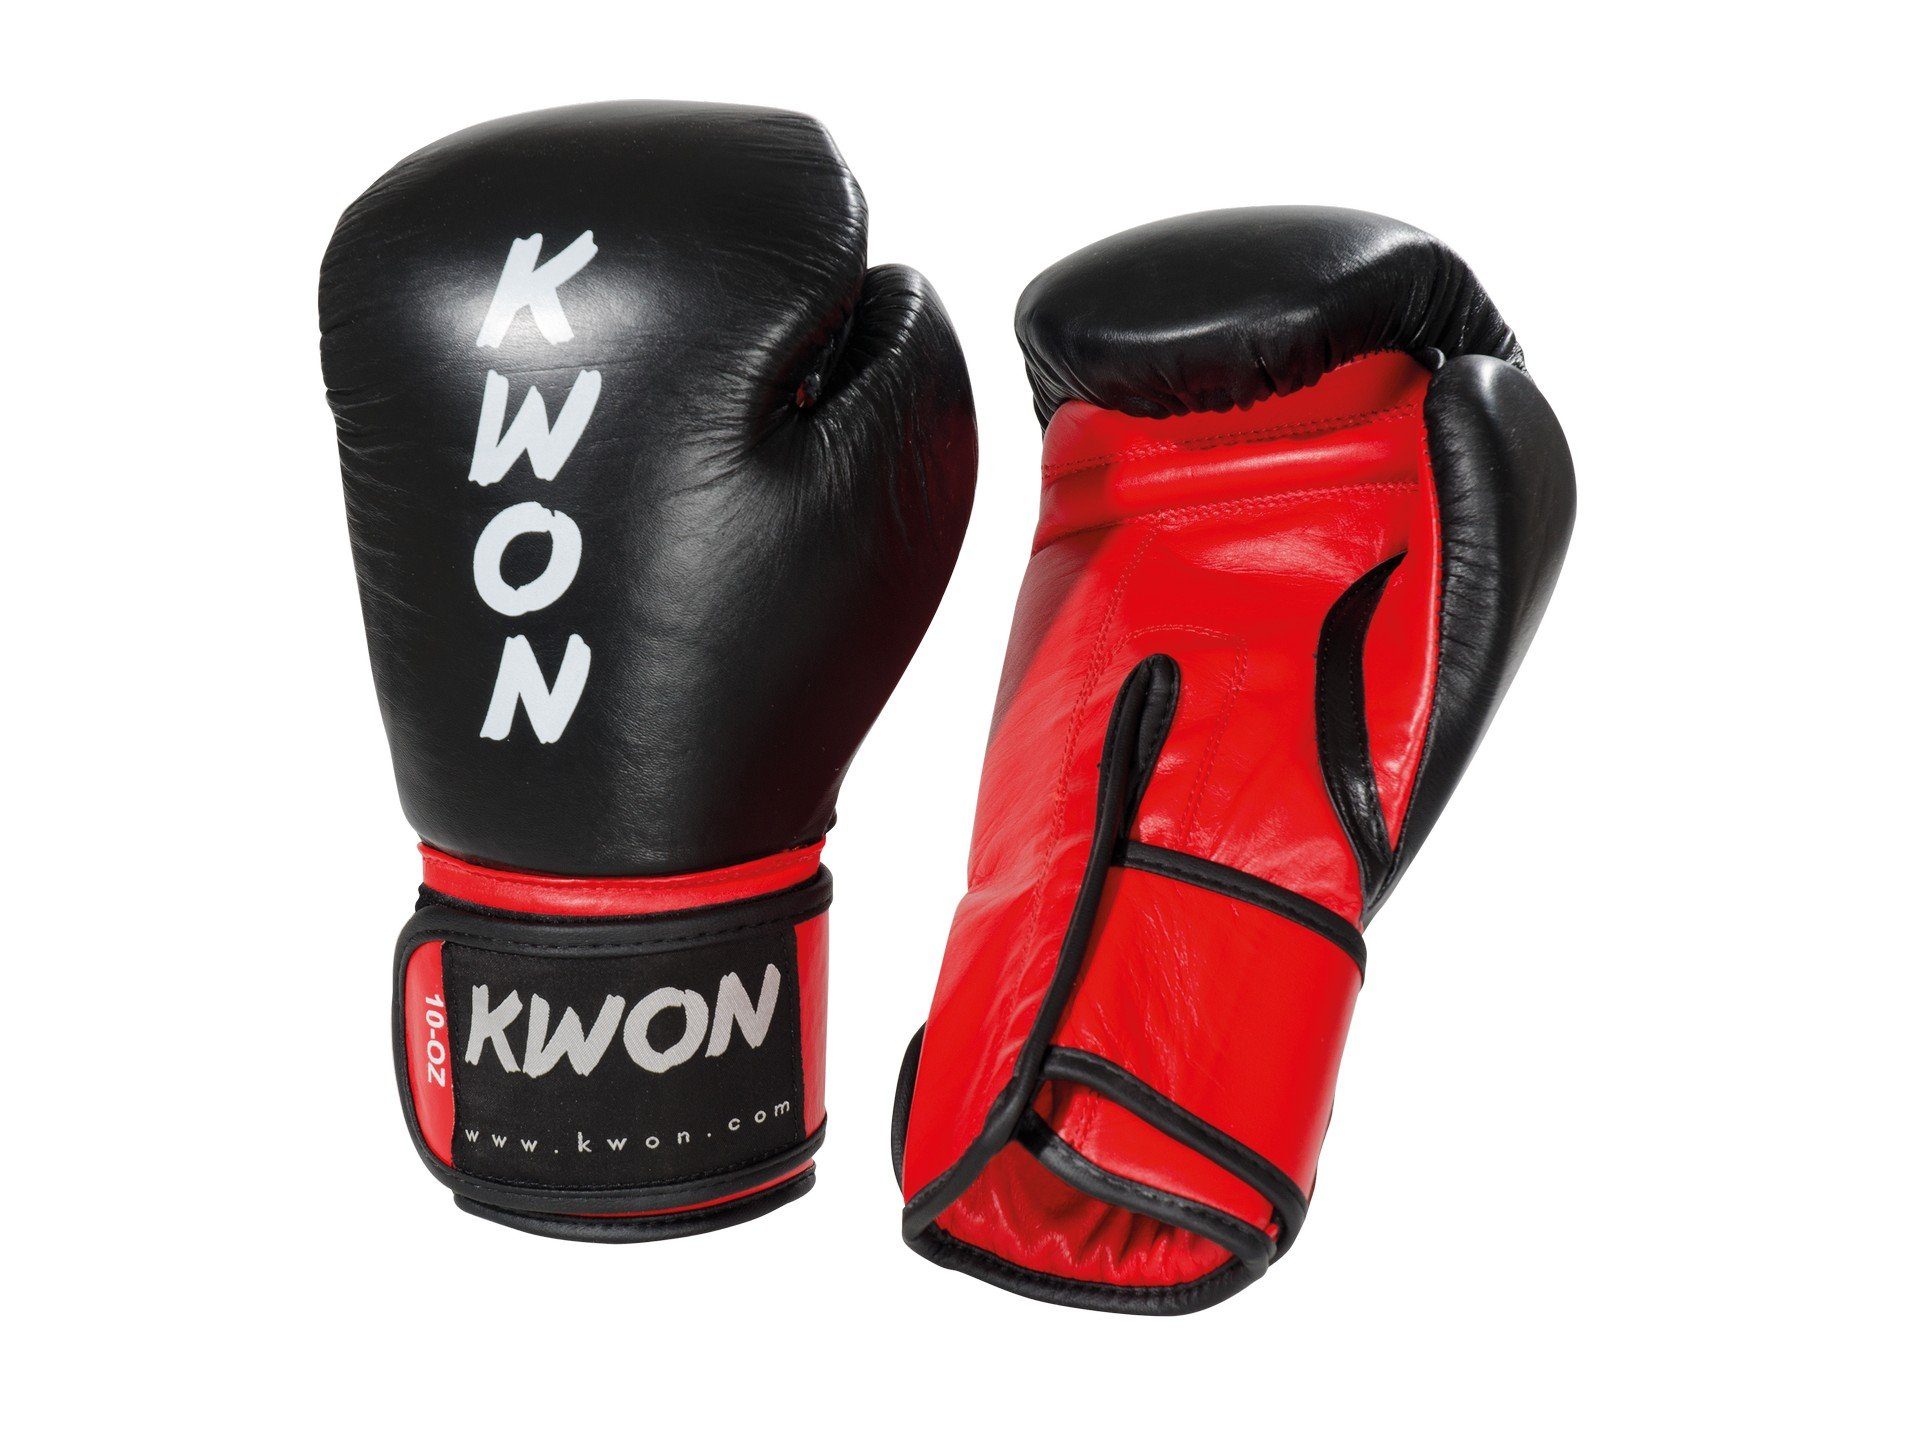 KWON Boxhandschuhe Profi Box-Handschuhe Boxen Champ Profi Ergo WKU Form, Echtes (Vollkontakt, Leder, anerkannt Ausführung, KO Kickboxen schwarz/rot Paar), Thaiboxen Leder